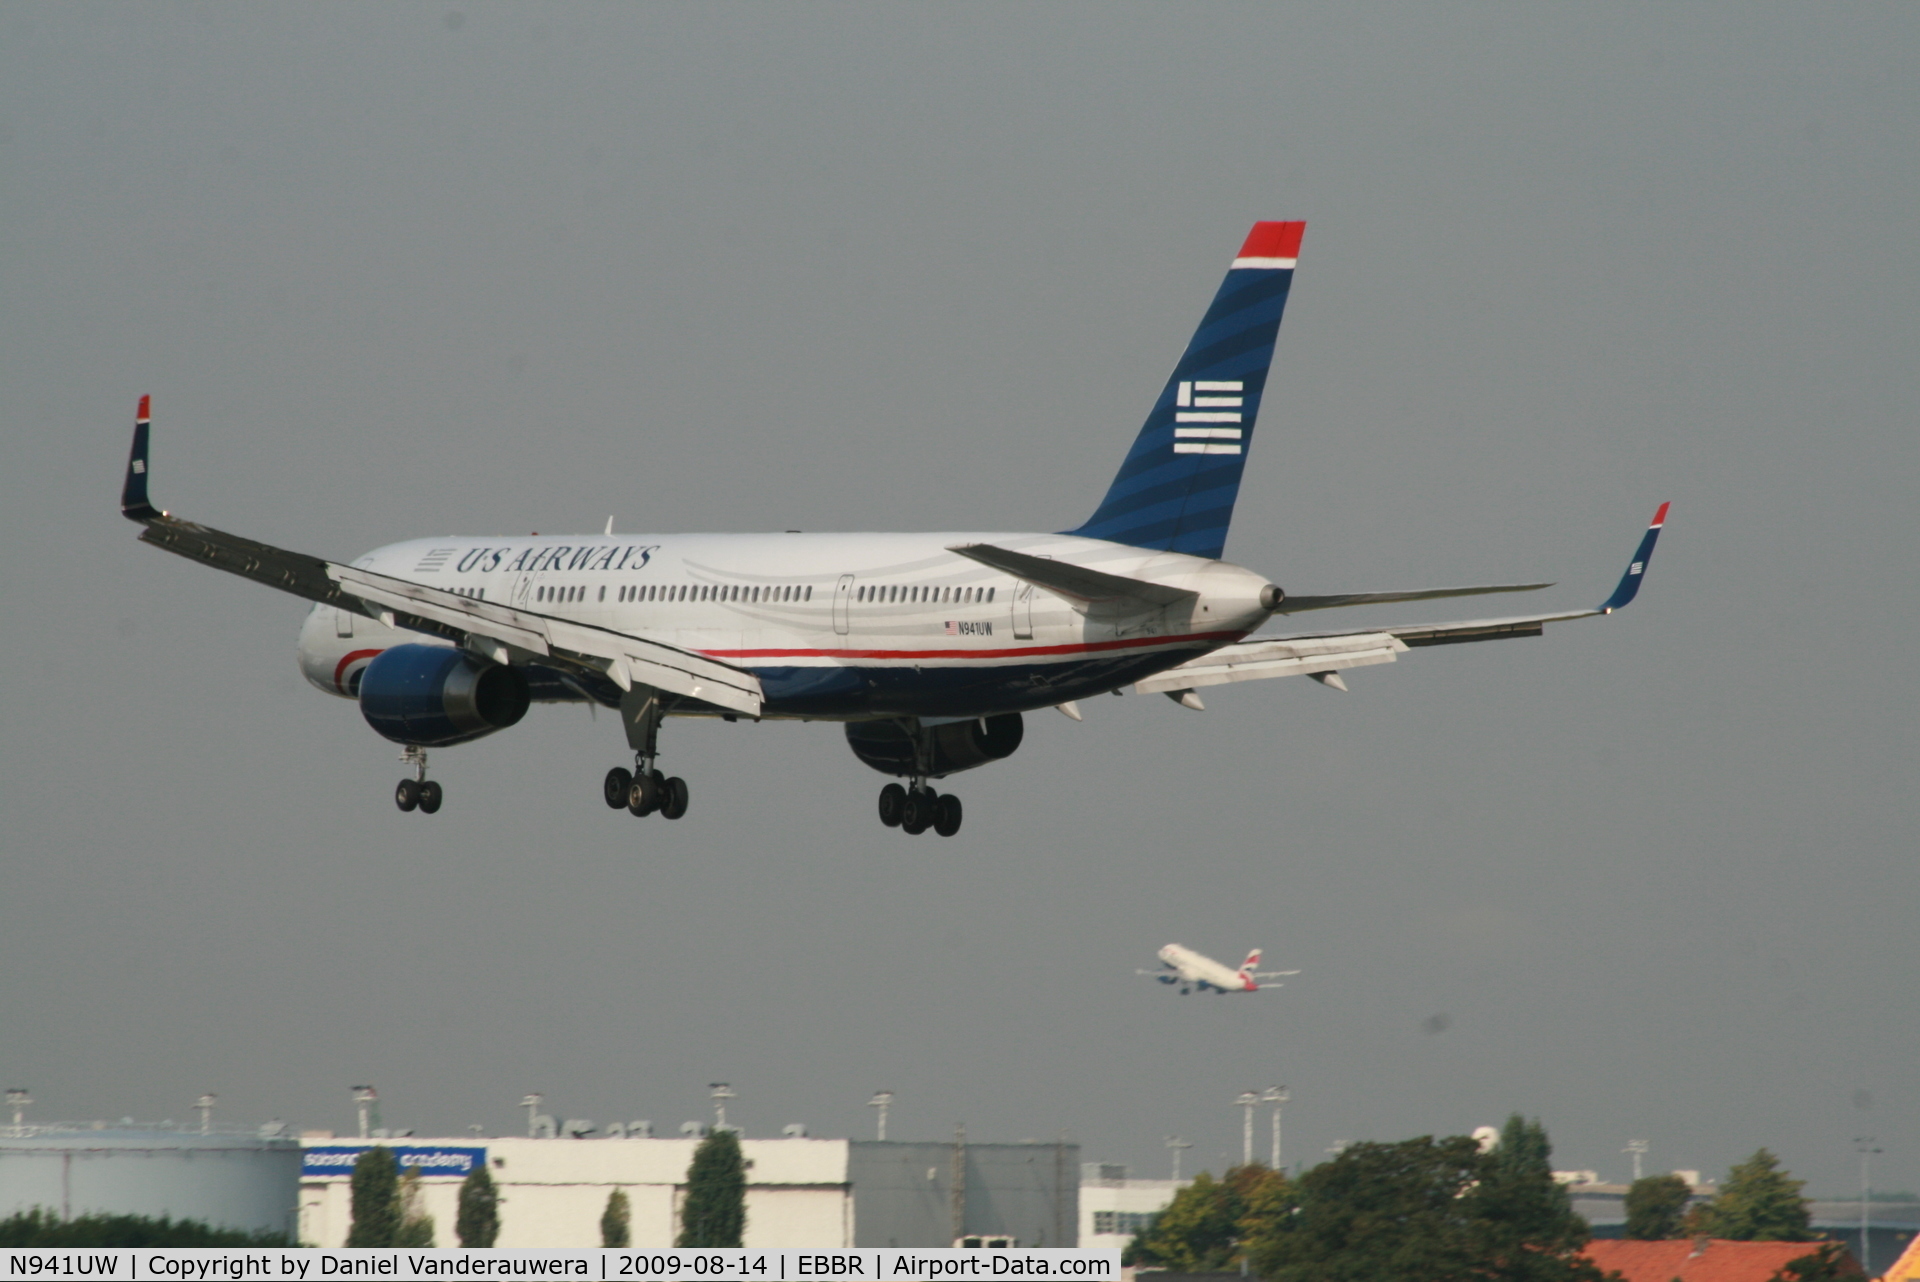 N941UW, 1995 Boeing 757-2B7 C/N 27806, flight US750 is descending to rwy 25L while flight BA391 takes off from rwy 25R